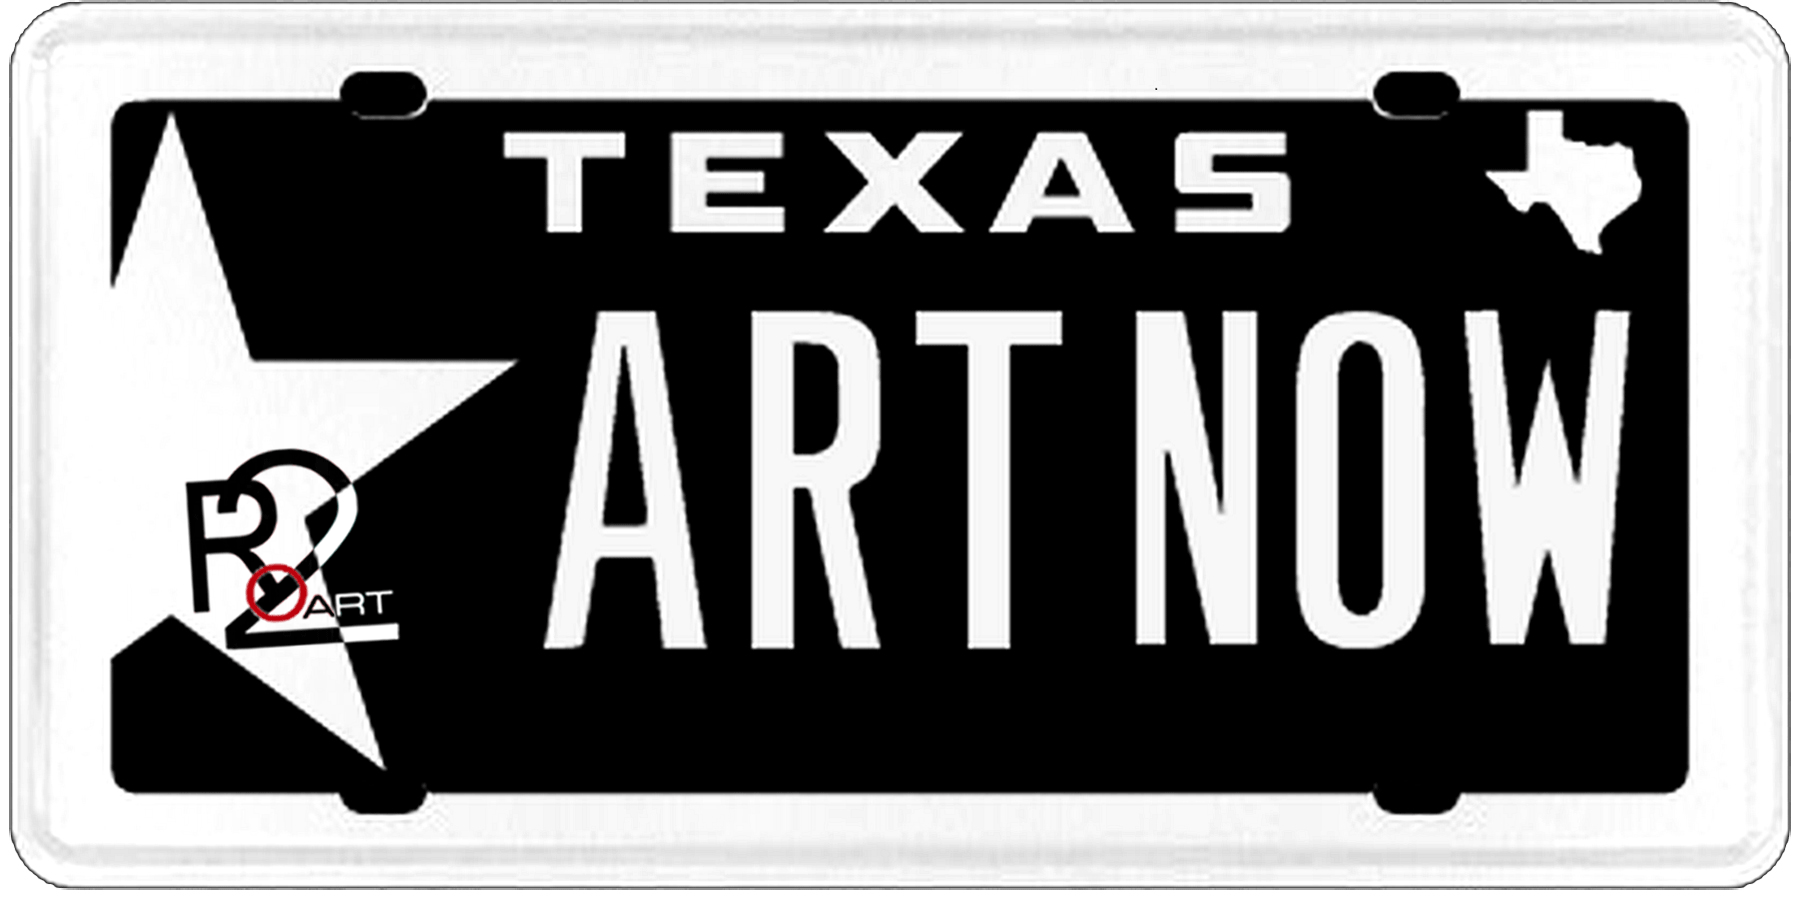 Ro2 Art presents TEXAS ART NOW, sponsored by Texas Art Collector